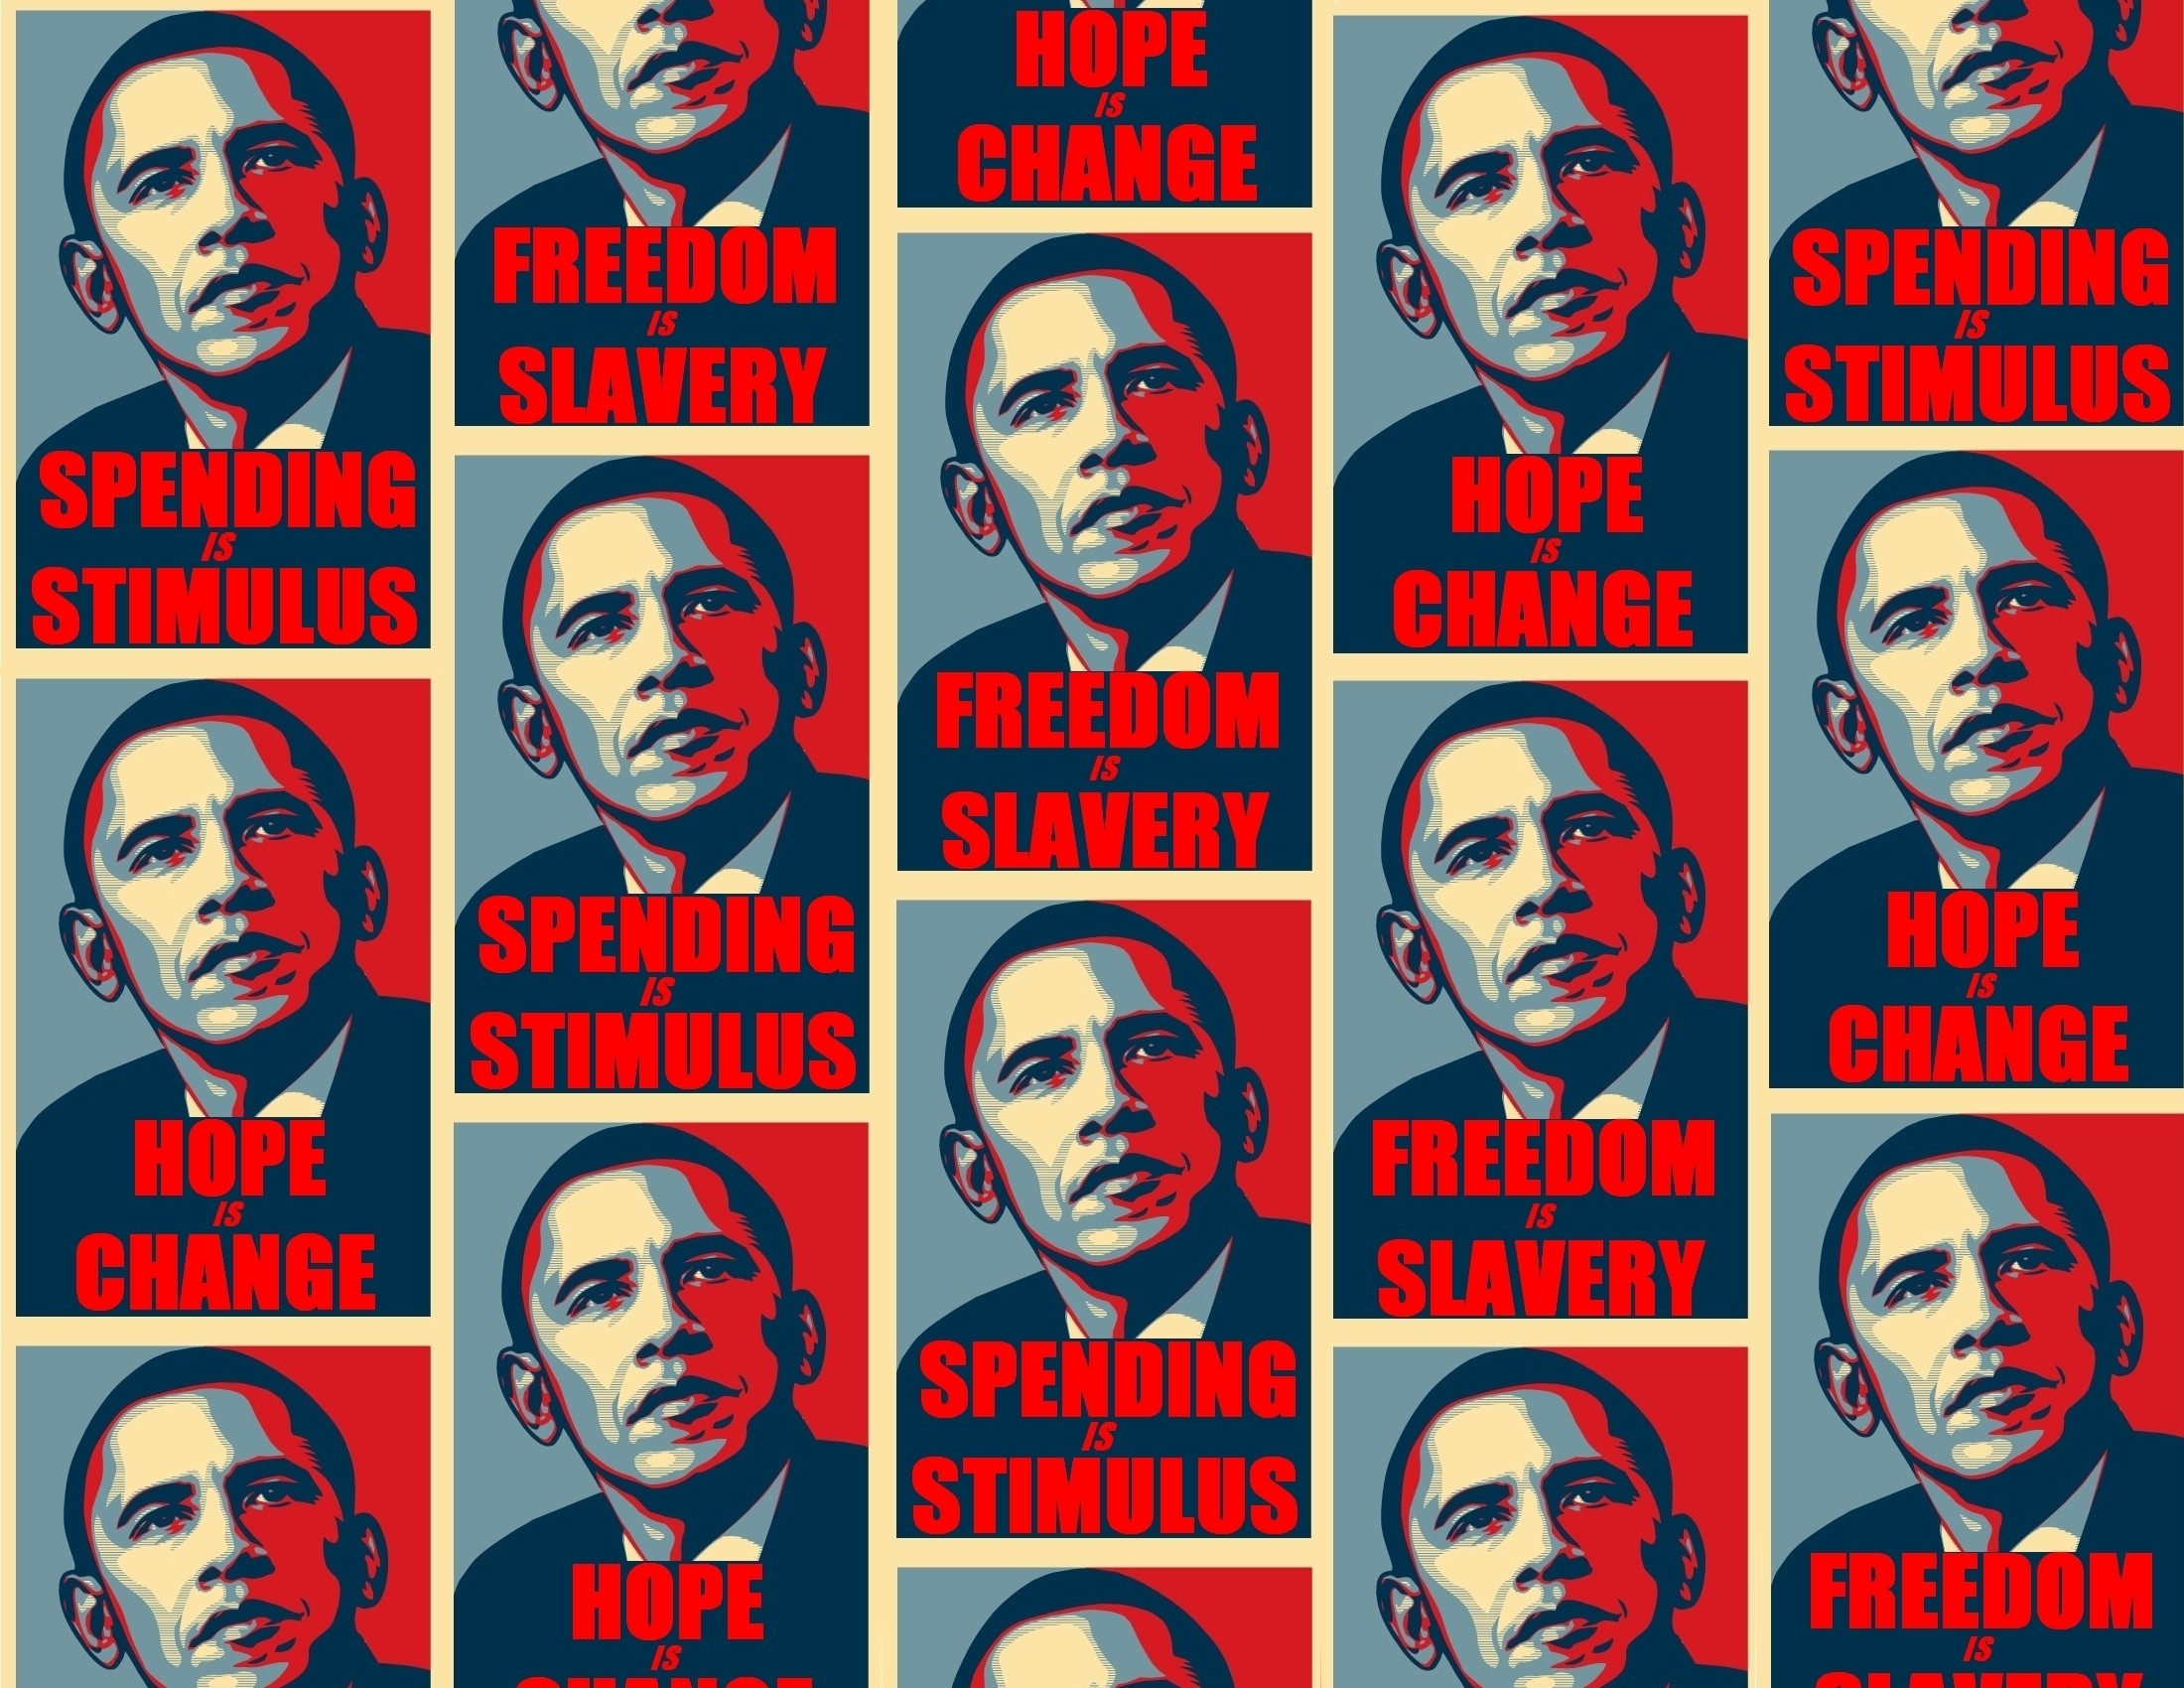 2200x1700 Barack Obama images obama tiled wallpaper HD wallpaper and background photos